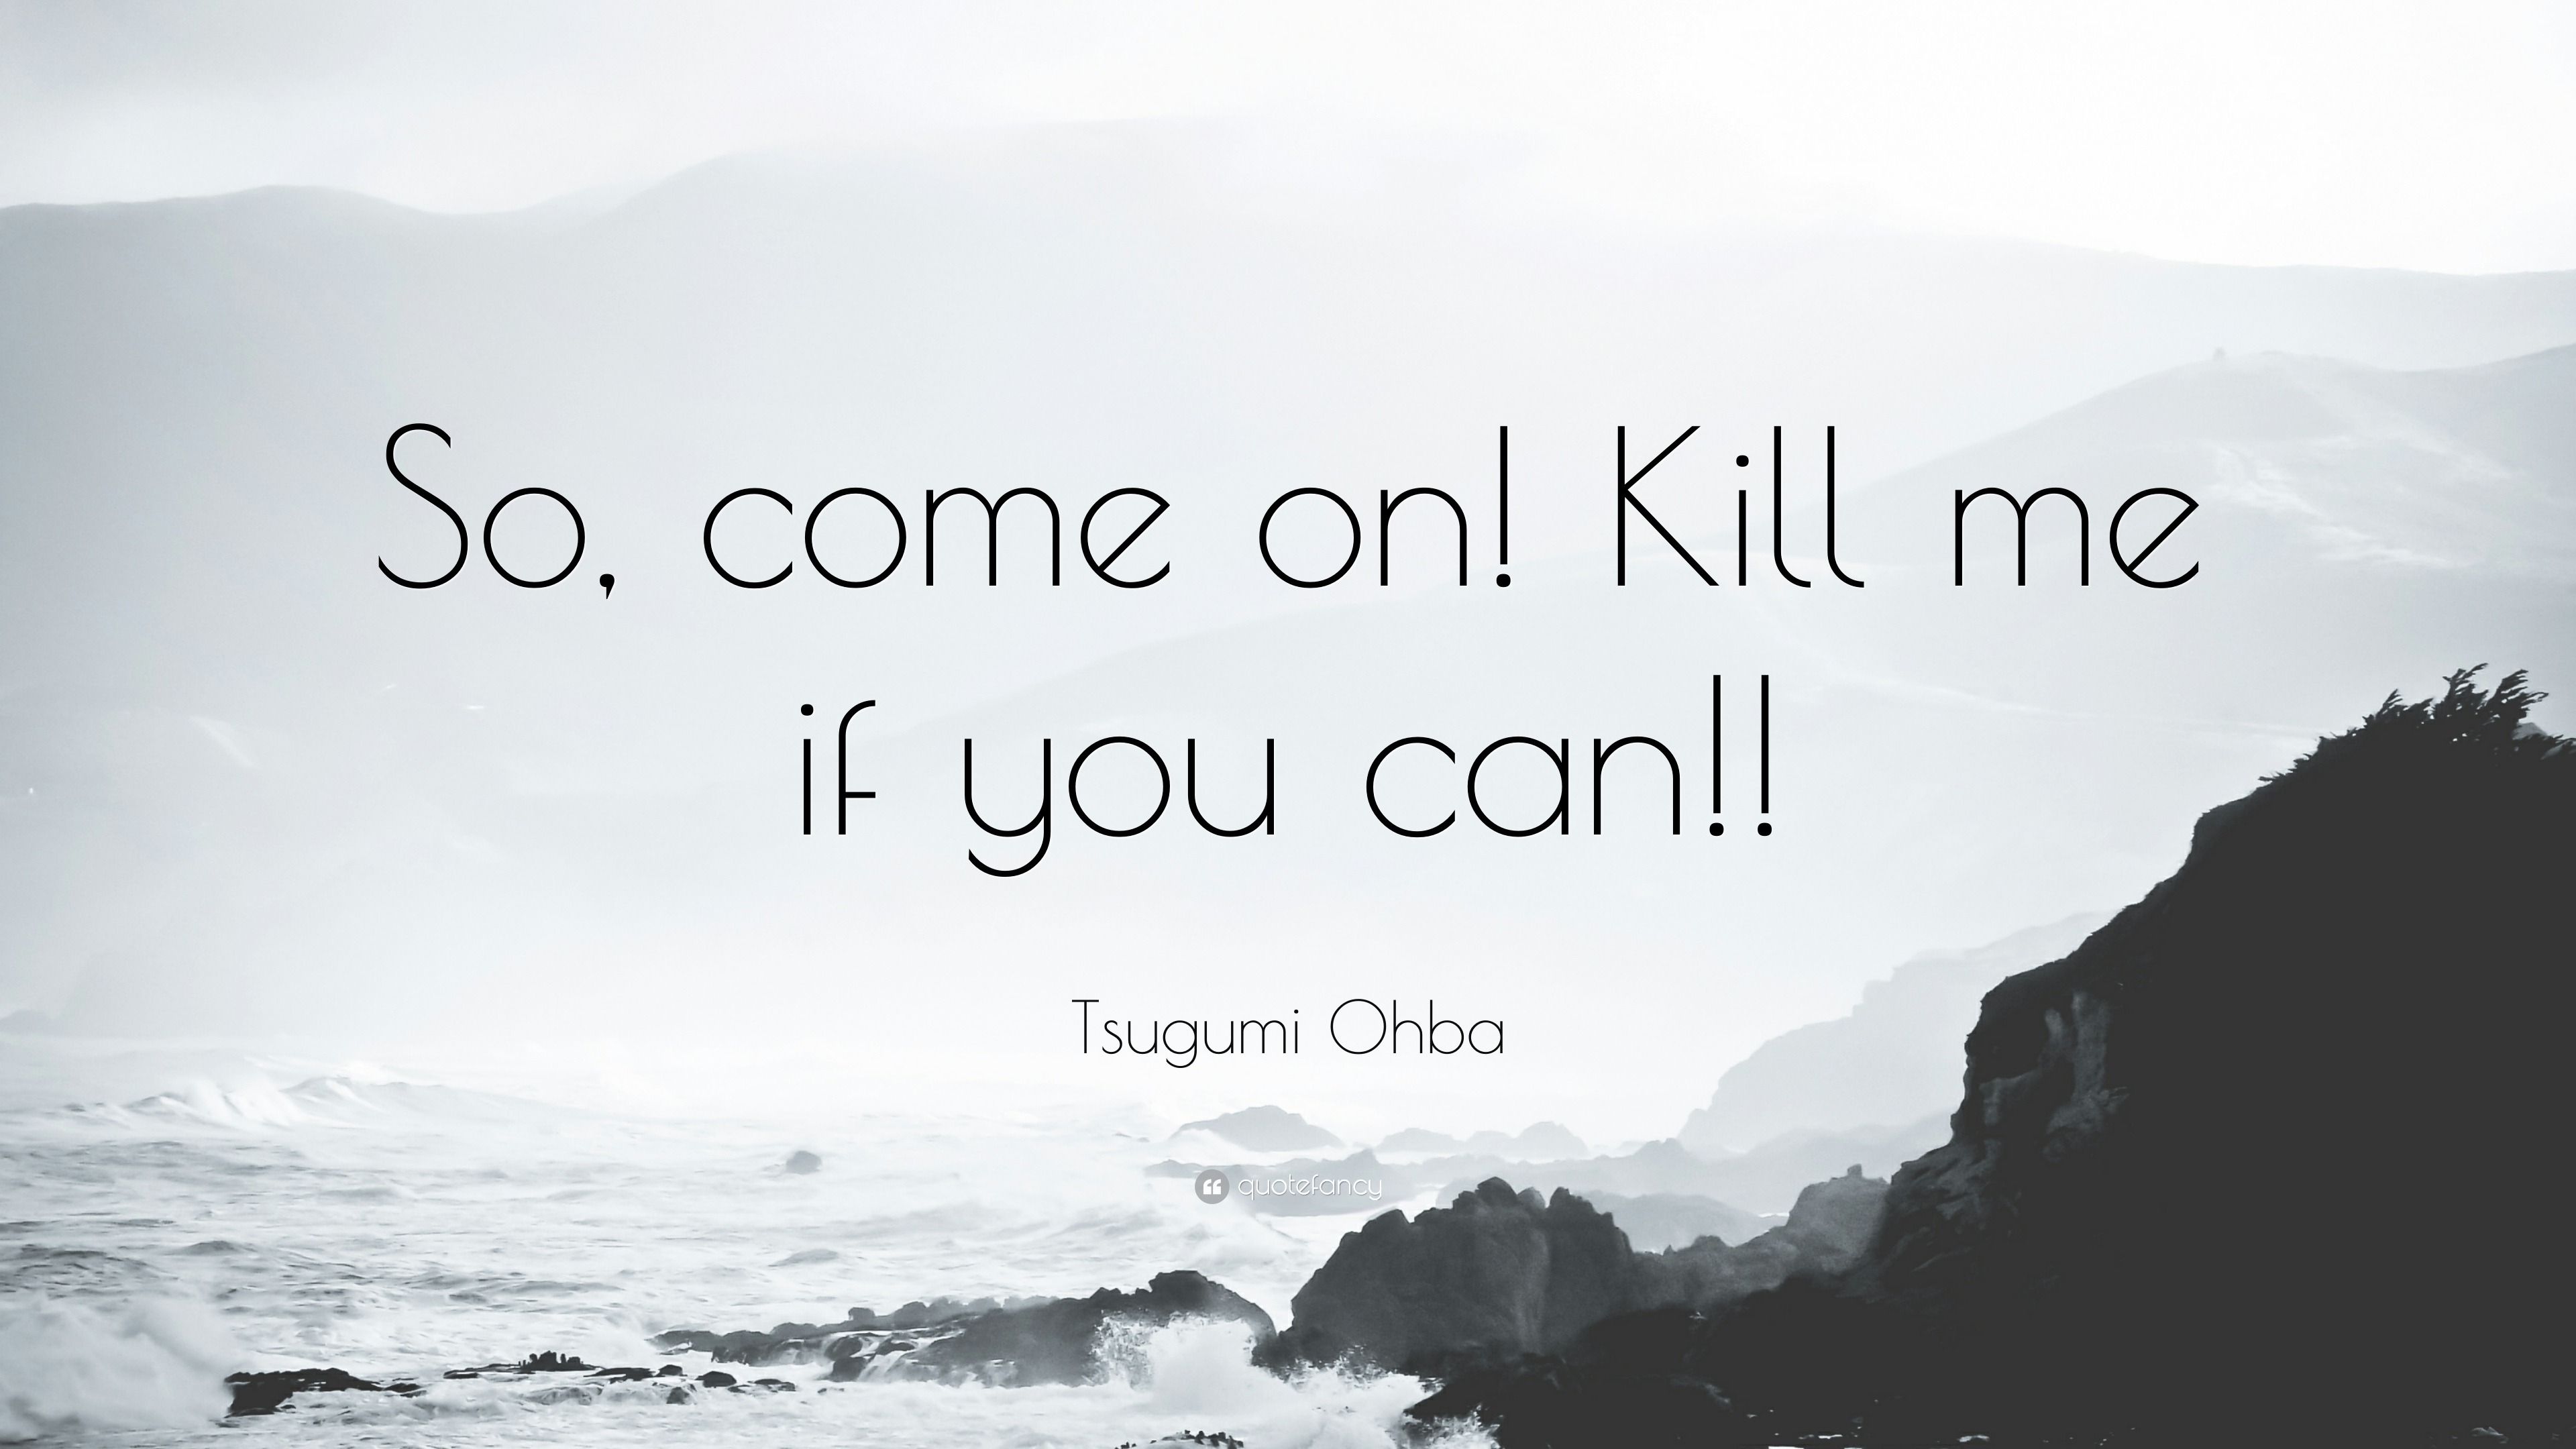 Tsugumi Ohba Quote: “So, come on! Kill me if you can!!”